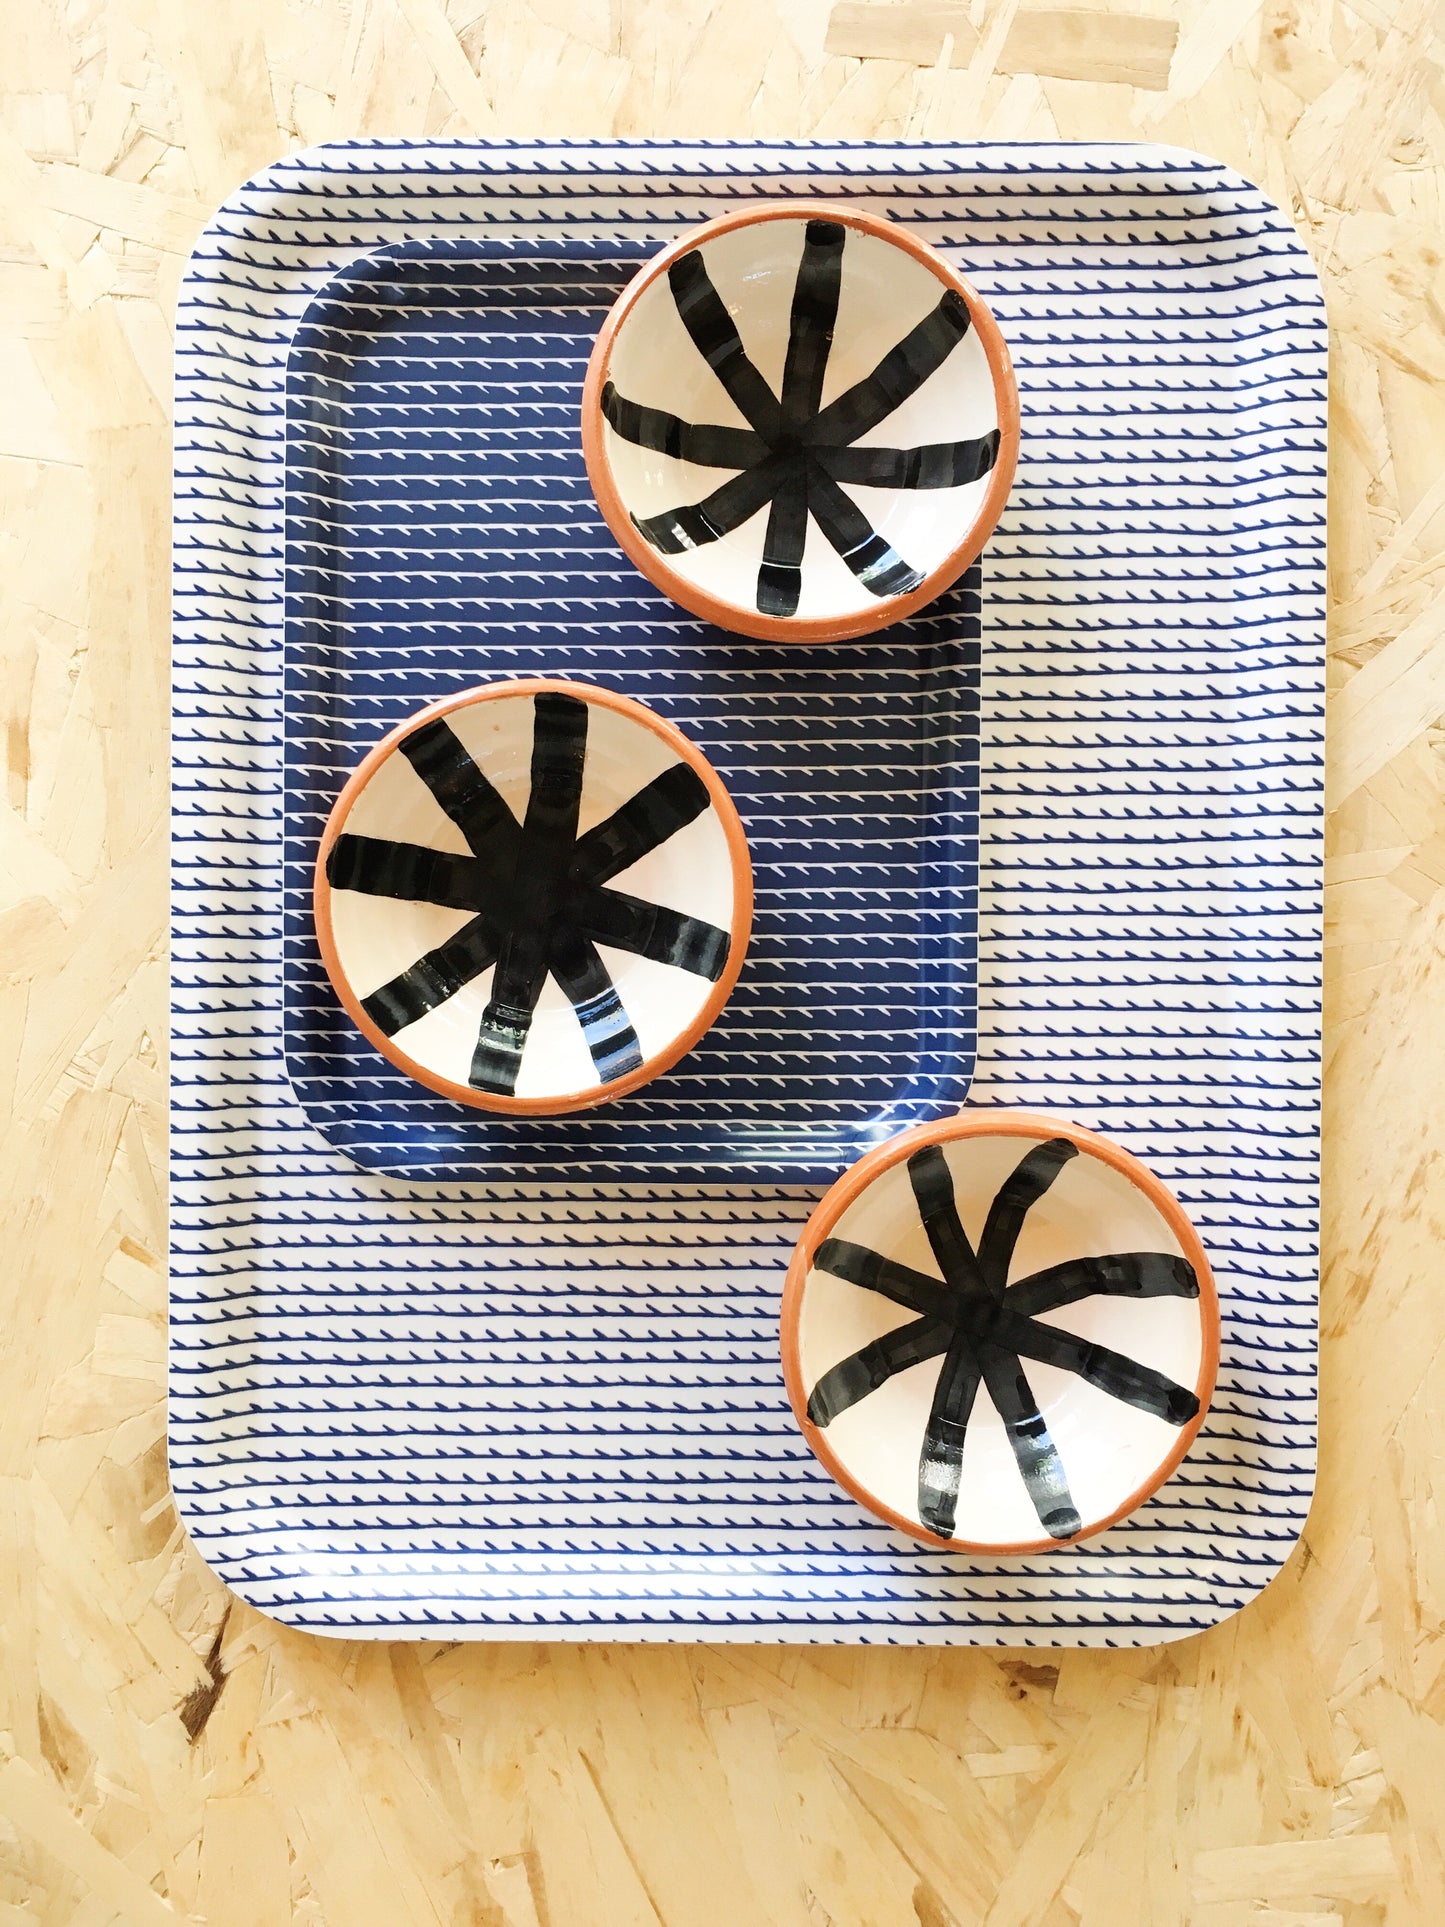 Handmade ceramic bowls geometric pattern black and white B&W